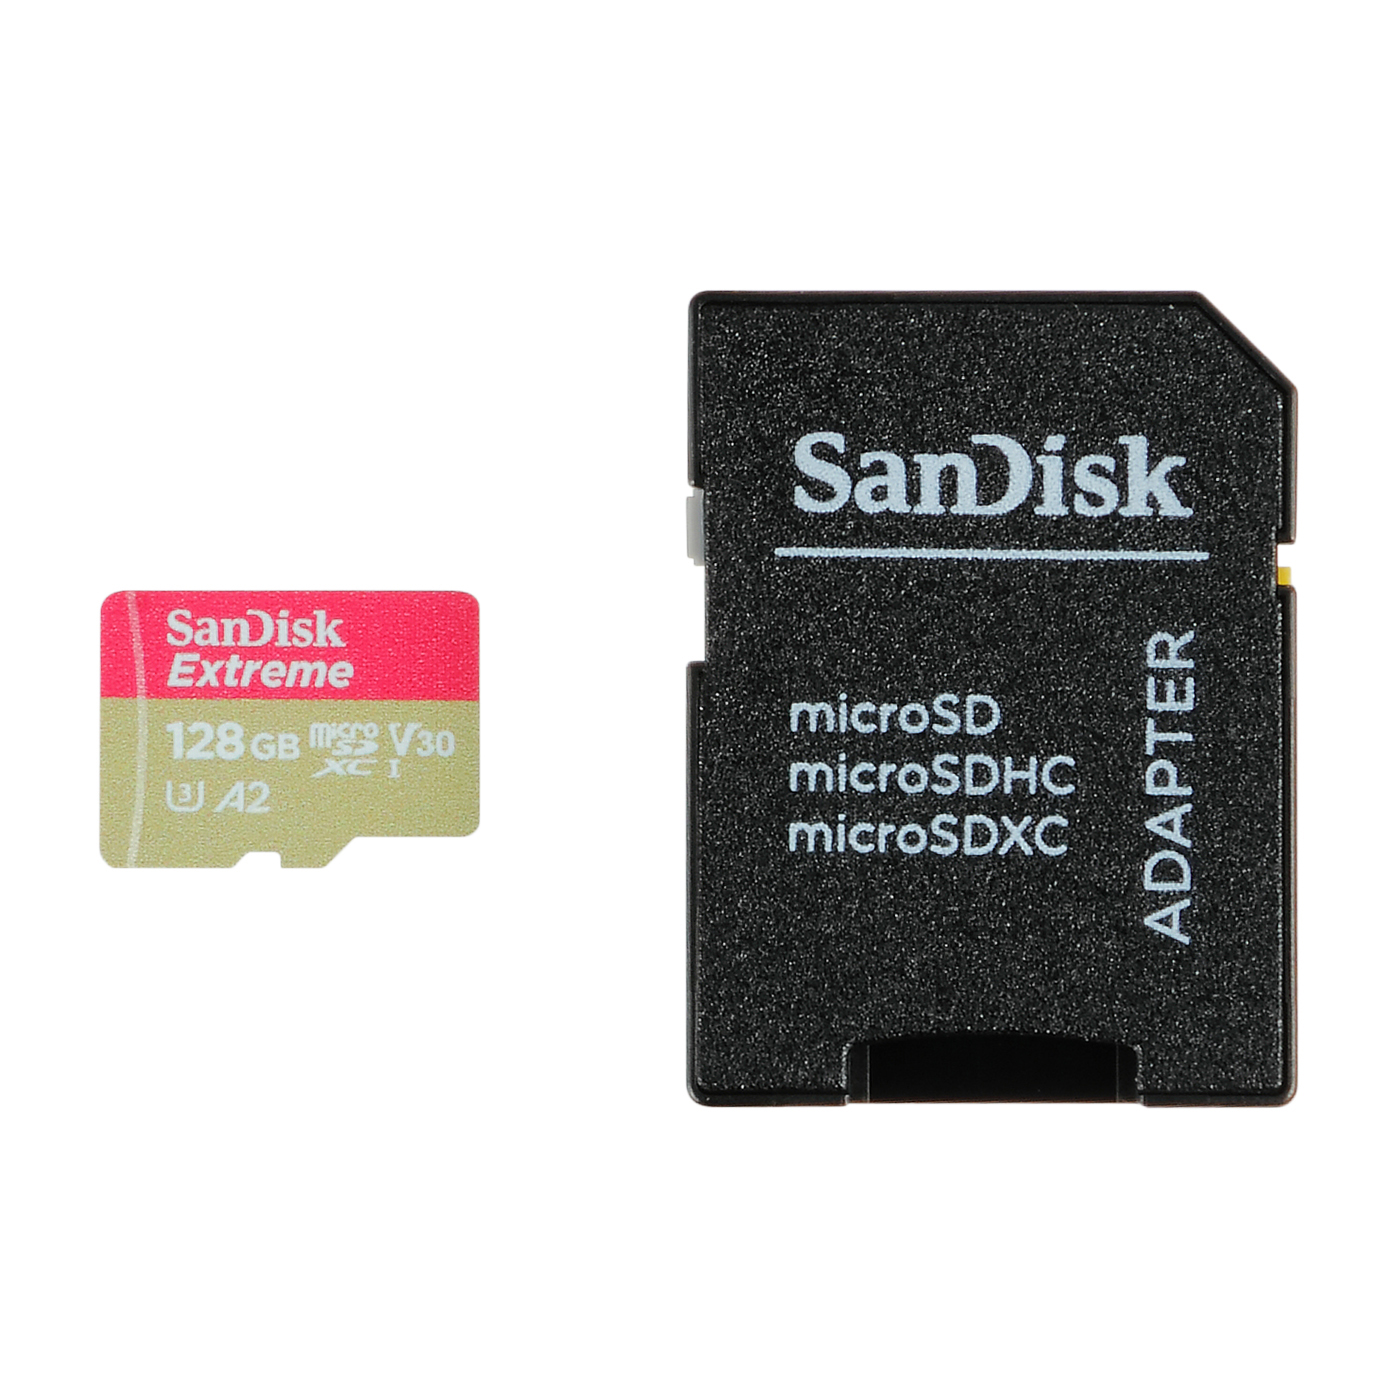 862円 都内で Samsung microSDXC カード 128GB EVO+ Class10 UHS-I U3対応 最大読込速度 100MB s W:6